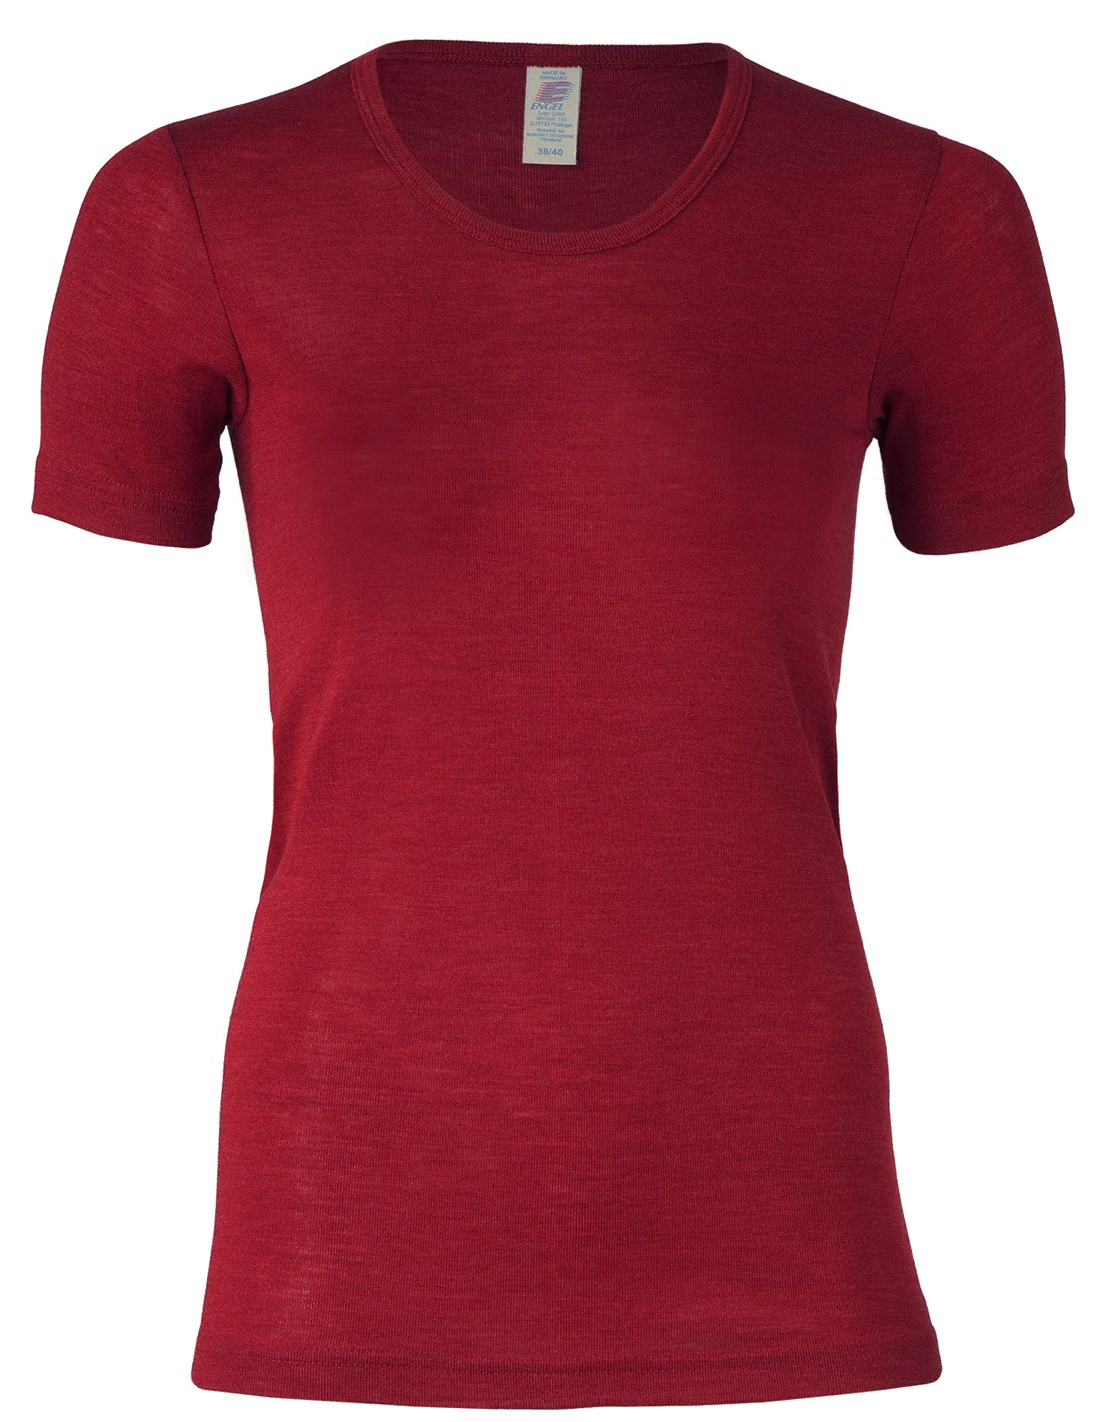 Image of Dames T-Shirt Zijde Wol Engel Natur, Kleur Bordeauxrood, Maat 38/40 - Medium